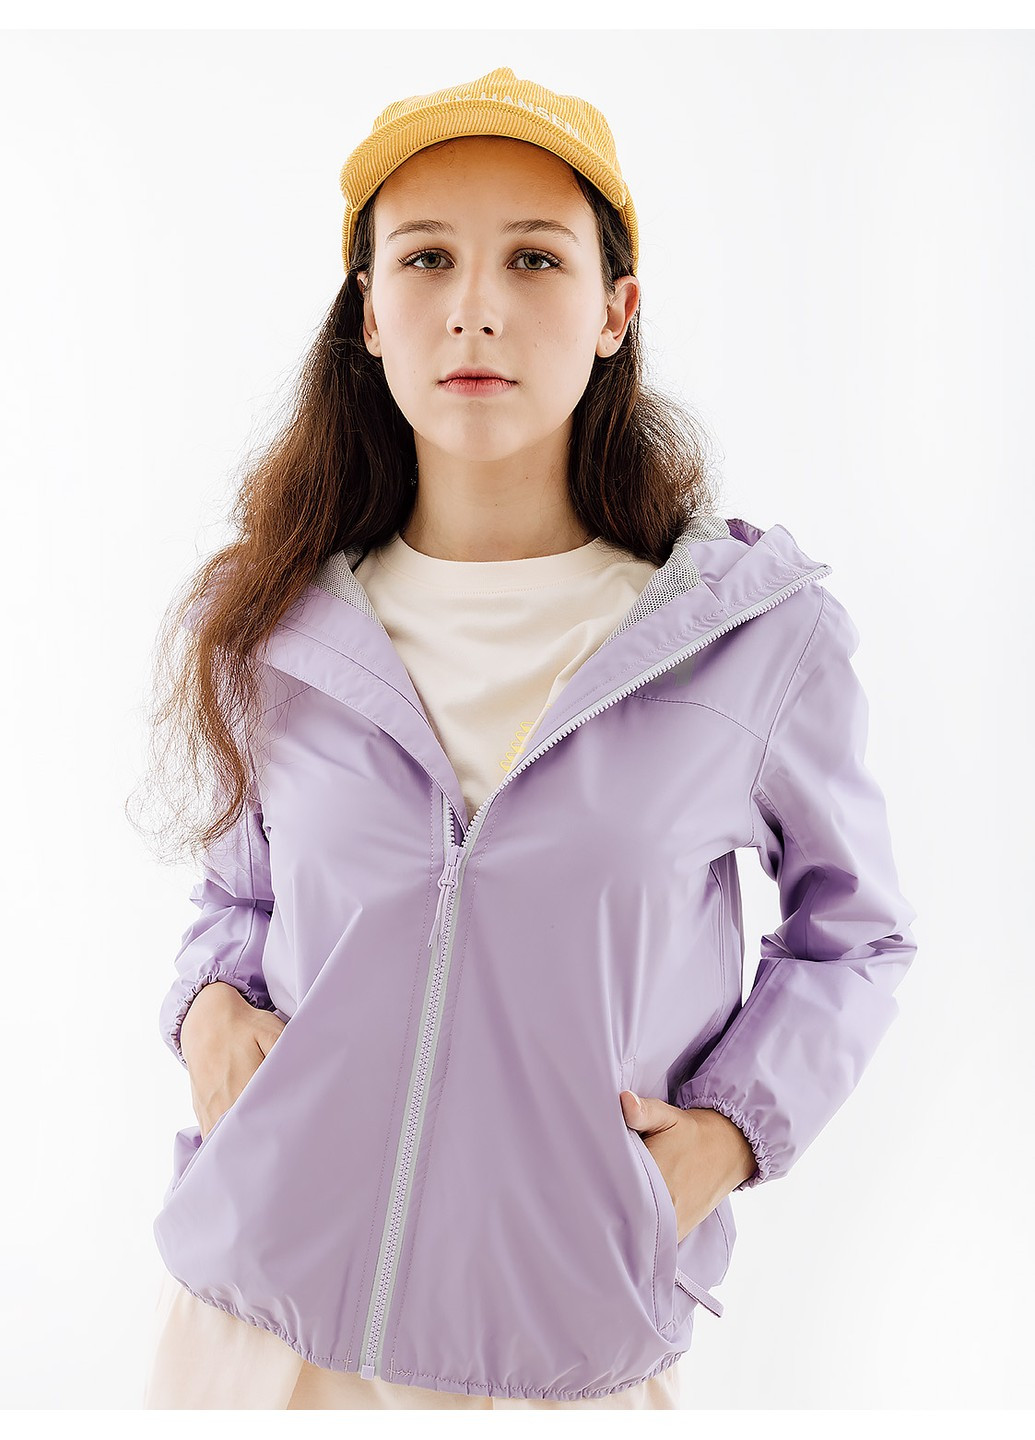 Фіолетова демісезонна куртка w belfast ii packable jacket Helly Hansen